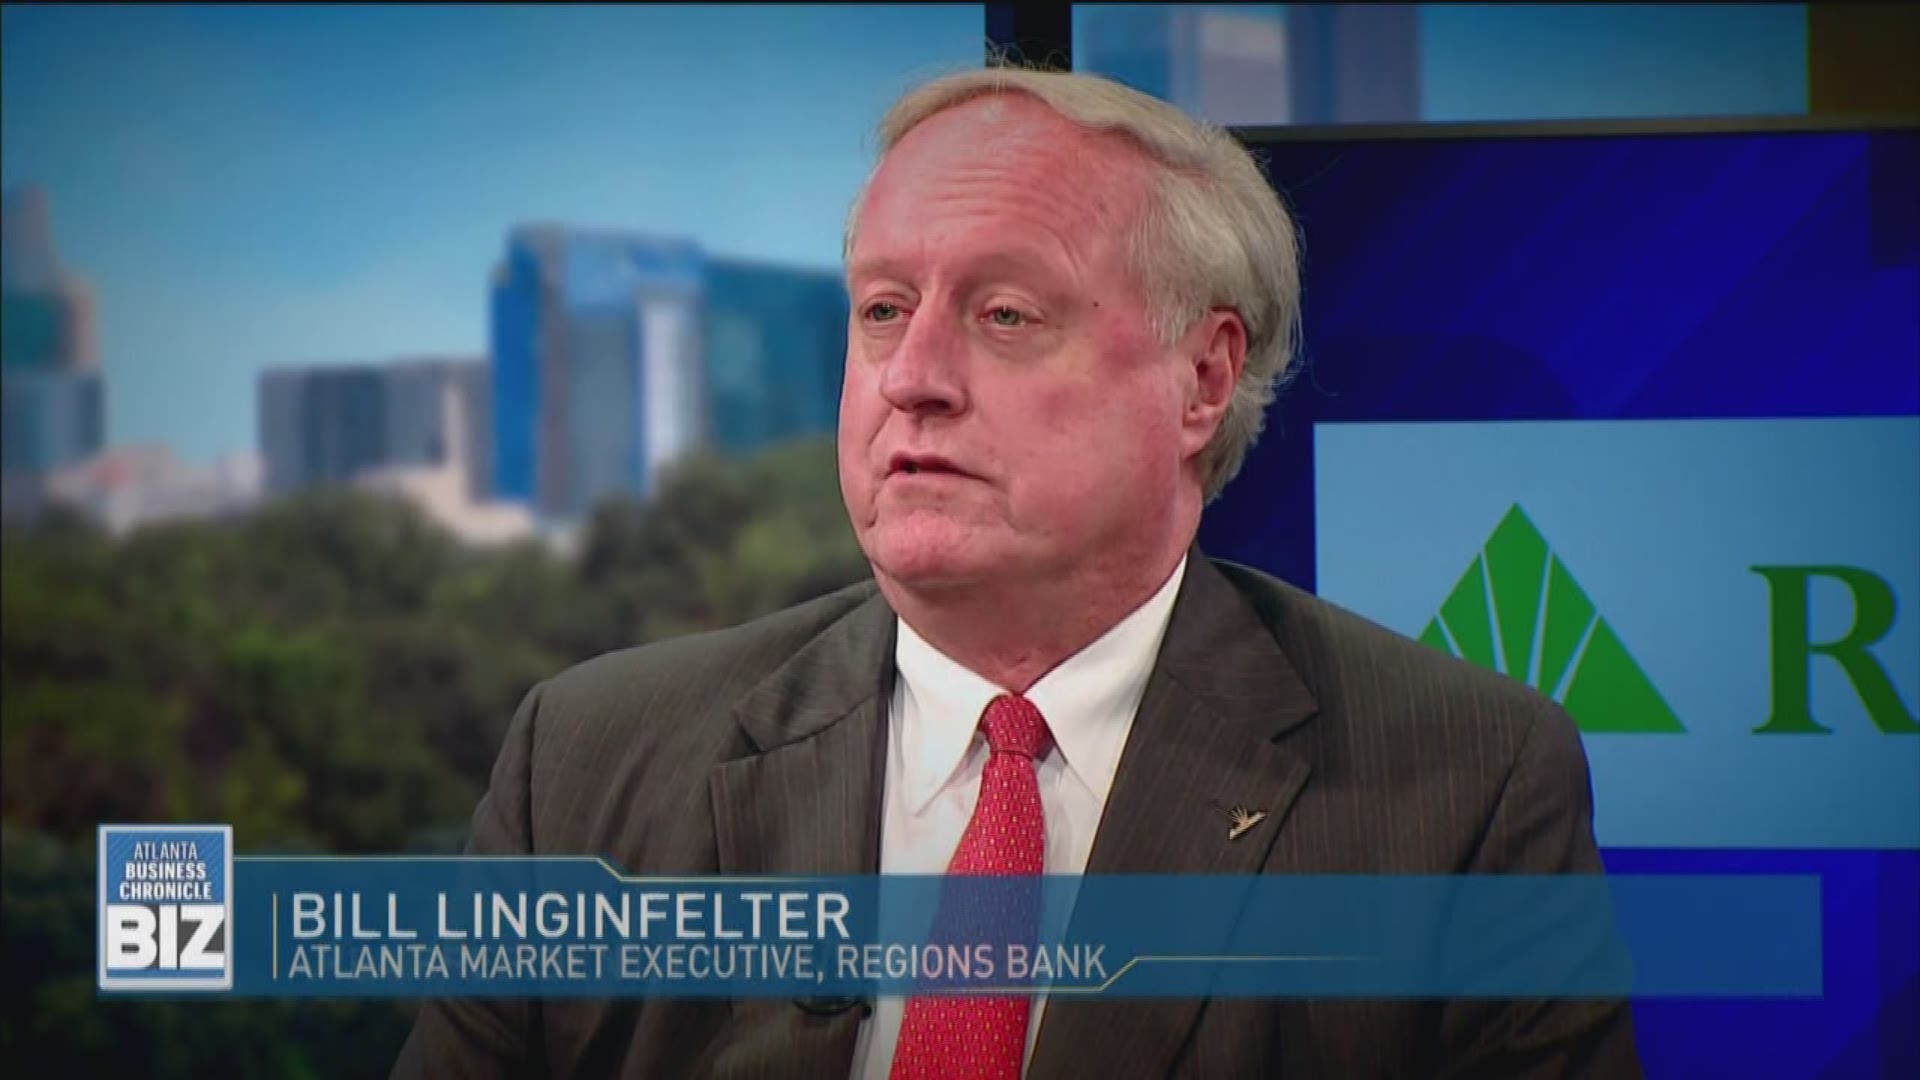 Regions Bank's Bill Linginfelter featured on 'Atlanta Business Chronicle's BIZ' Executive Profiles